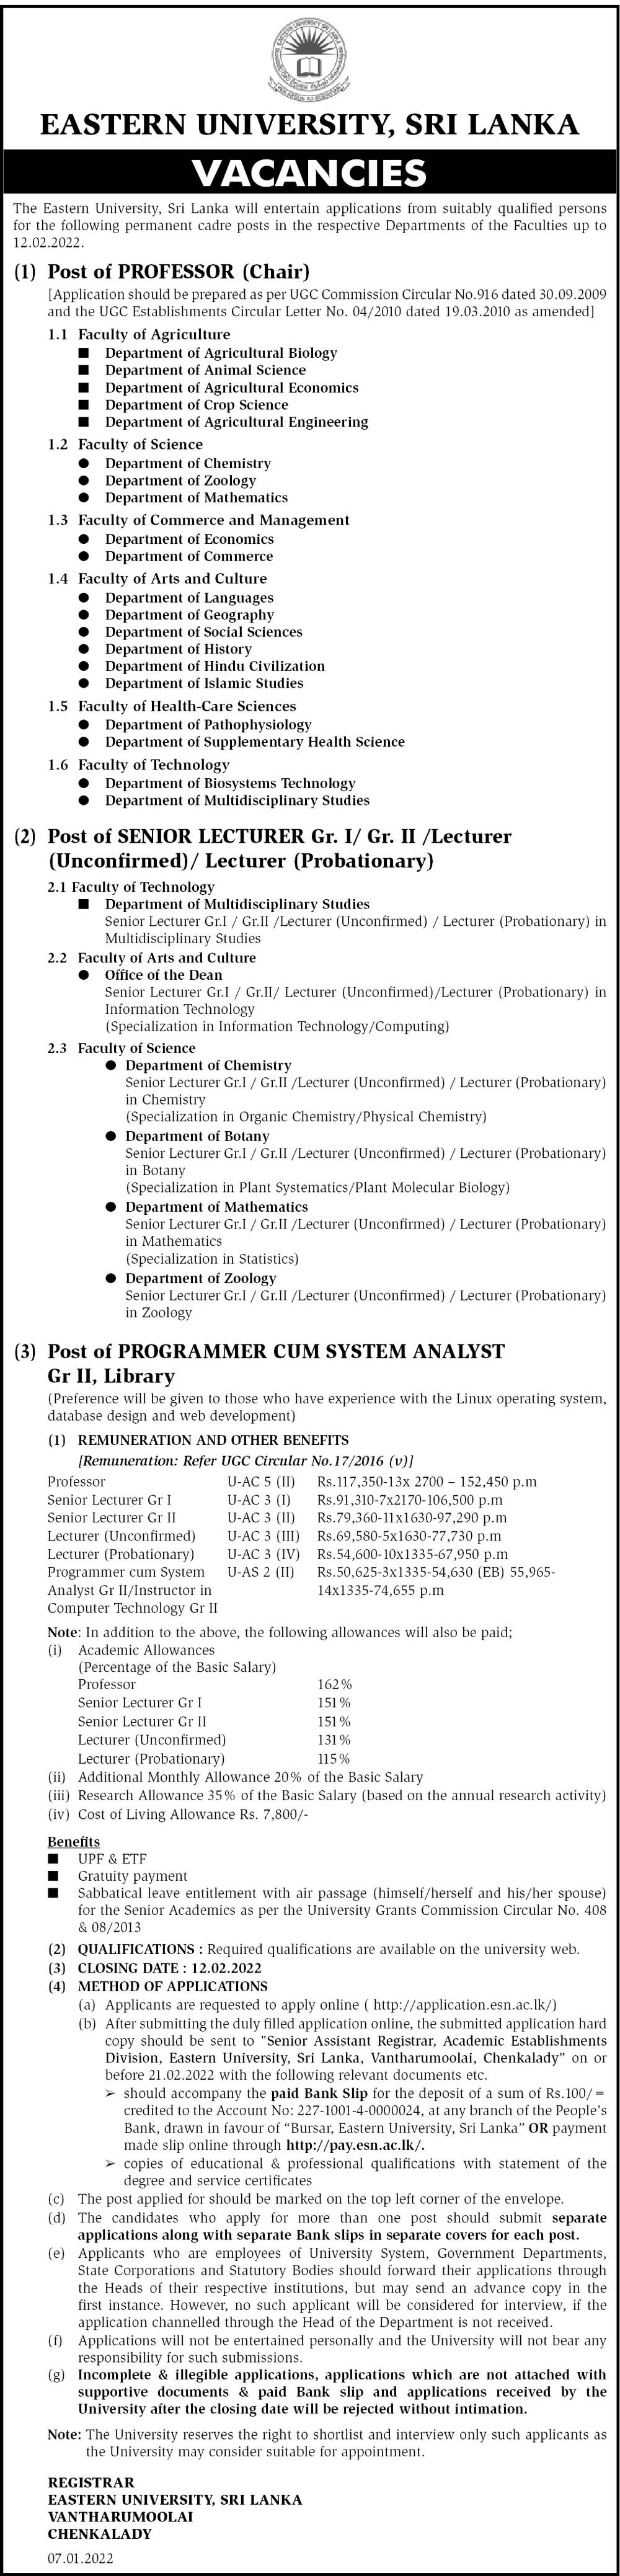 Professor, Senior Lecturer, Lecturer, Programmer Cum System Analyst - Eastern University,  Sri Lanka